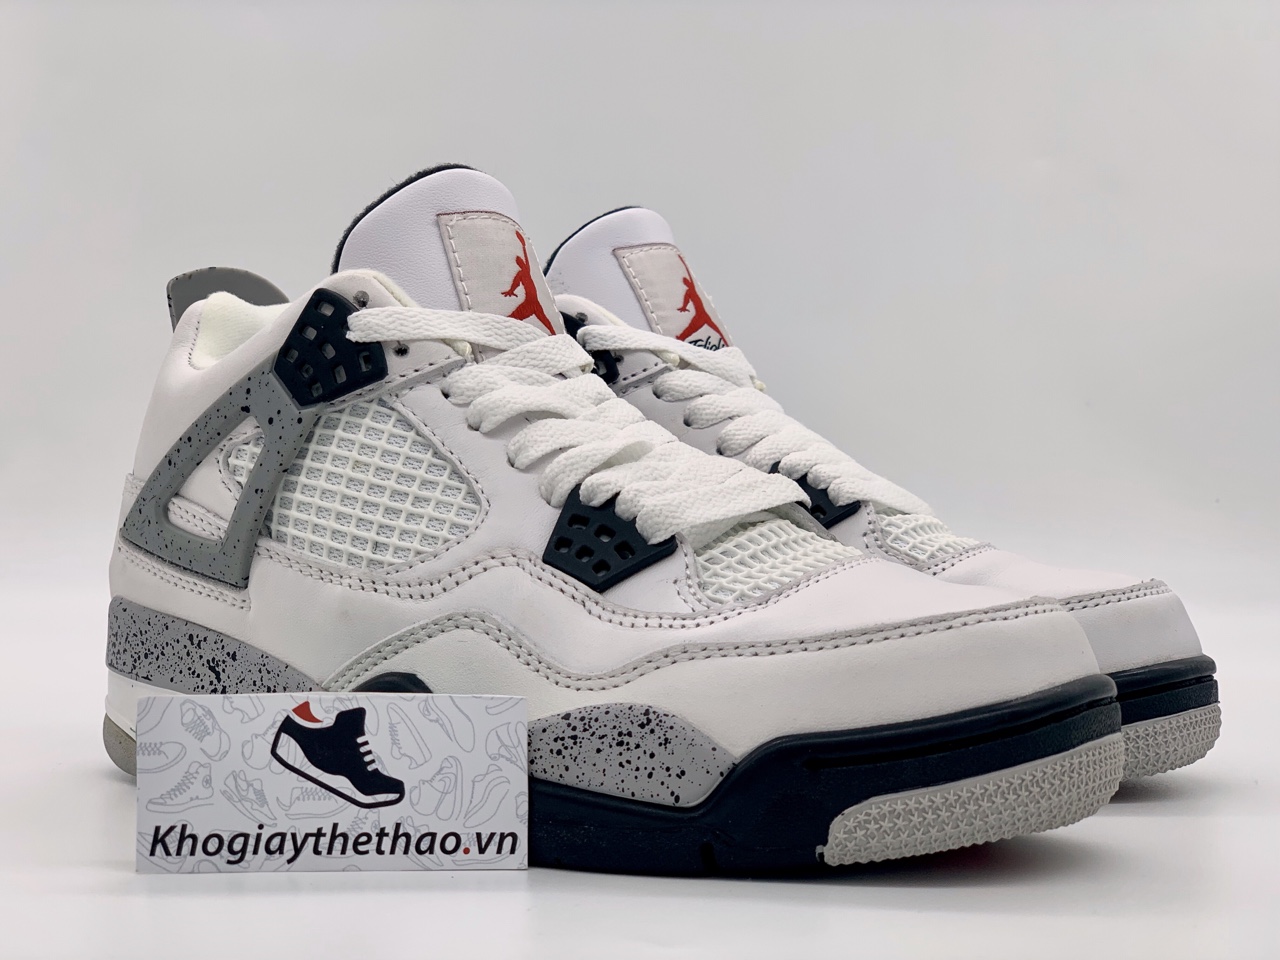 GiÃ y Nike air Jordan 4 Retro White Cement replica